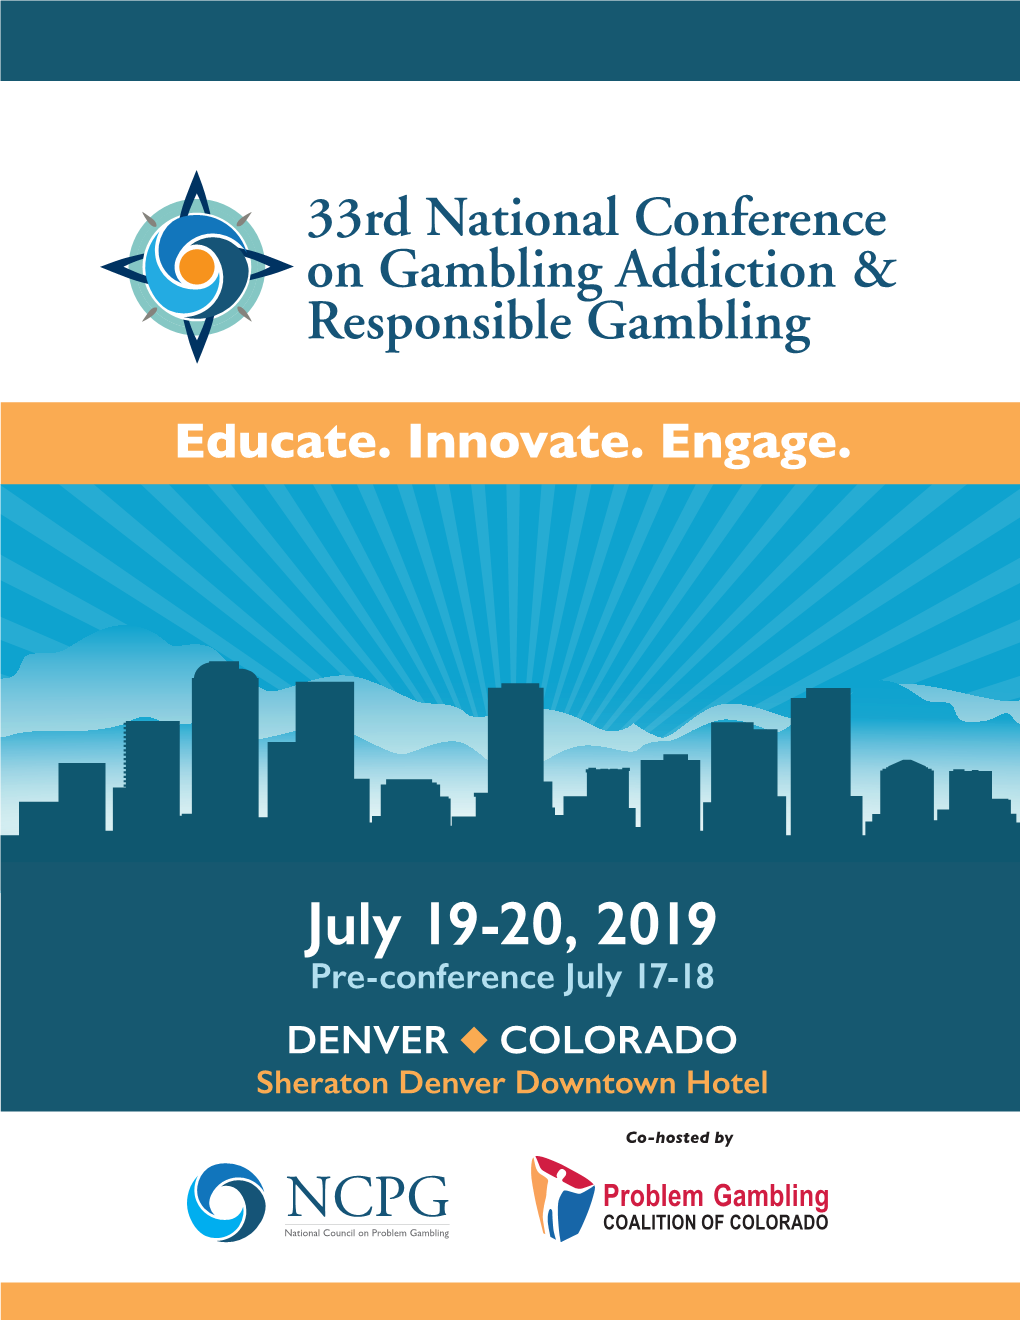 July 19-20, 2019 Pre-Conference July 17-18 DENVER COLORADO Sheraton Denver Downtown Hotel